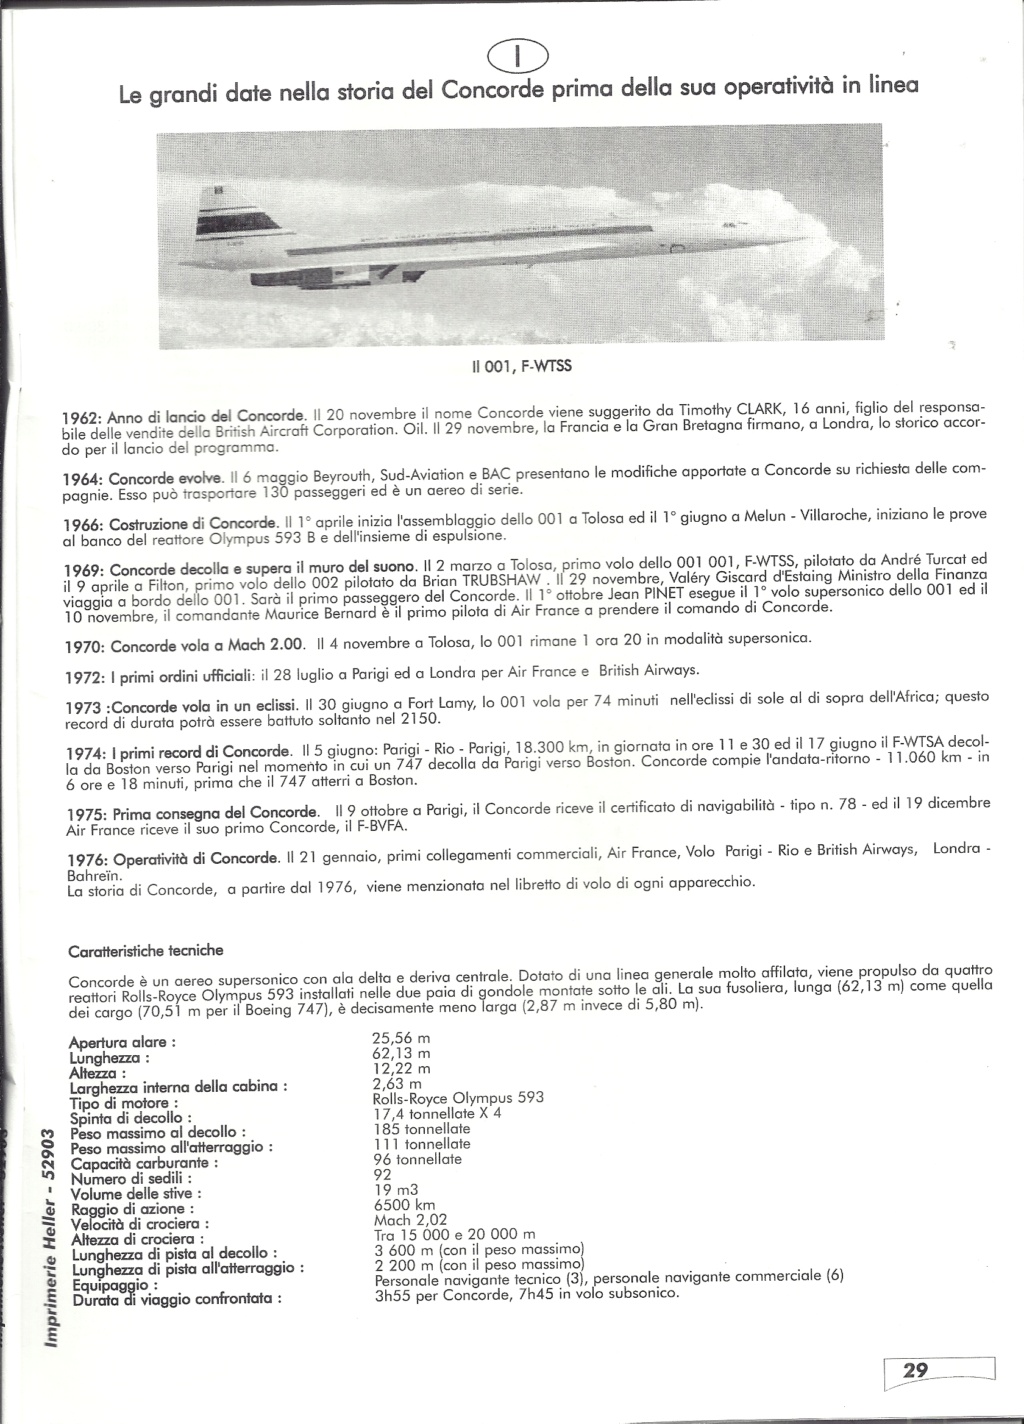 SUD AVIATION - BRITISH AIRCRAFT CORPORATION  CONCORDE 1/72ème Réf 52903 Notice Hell2279